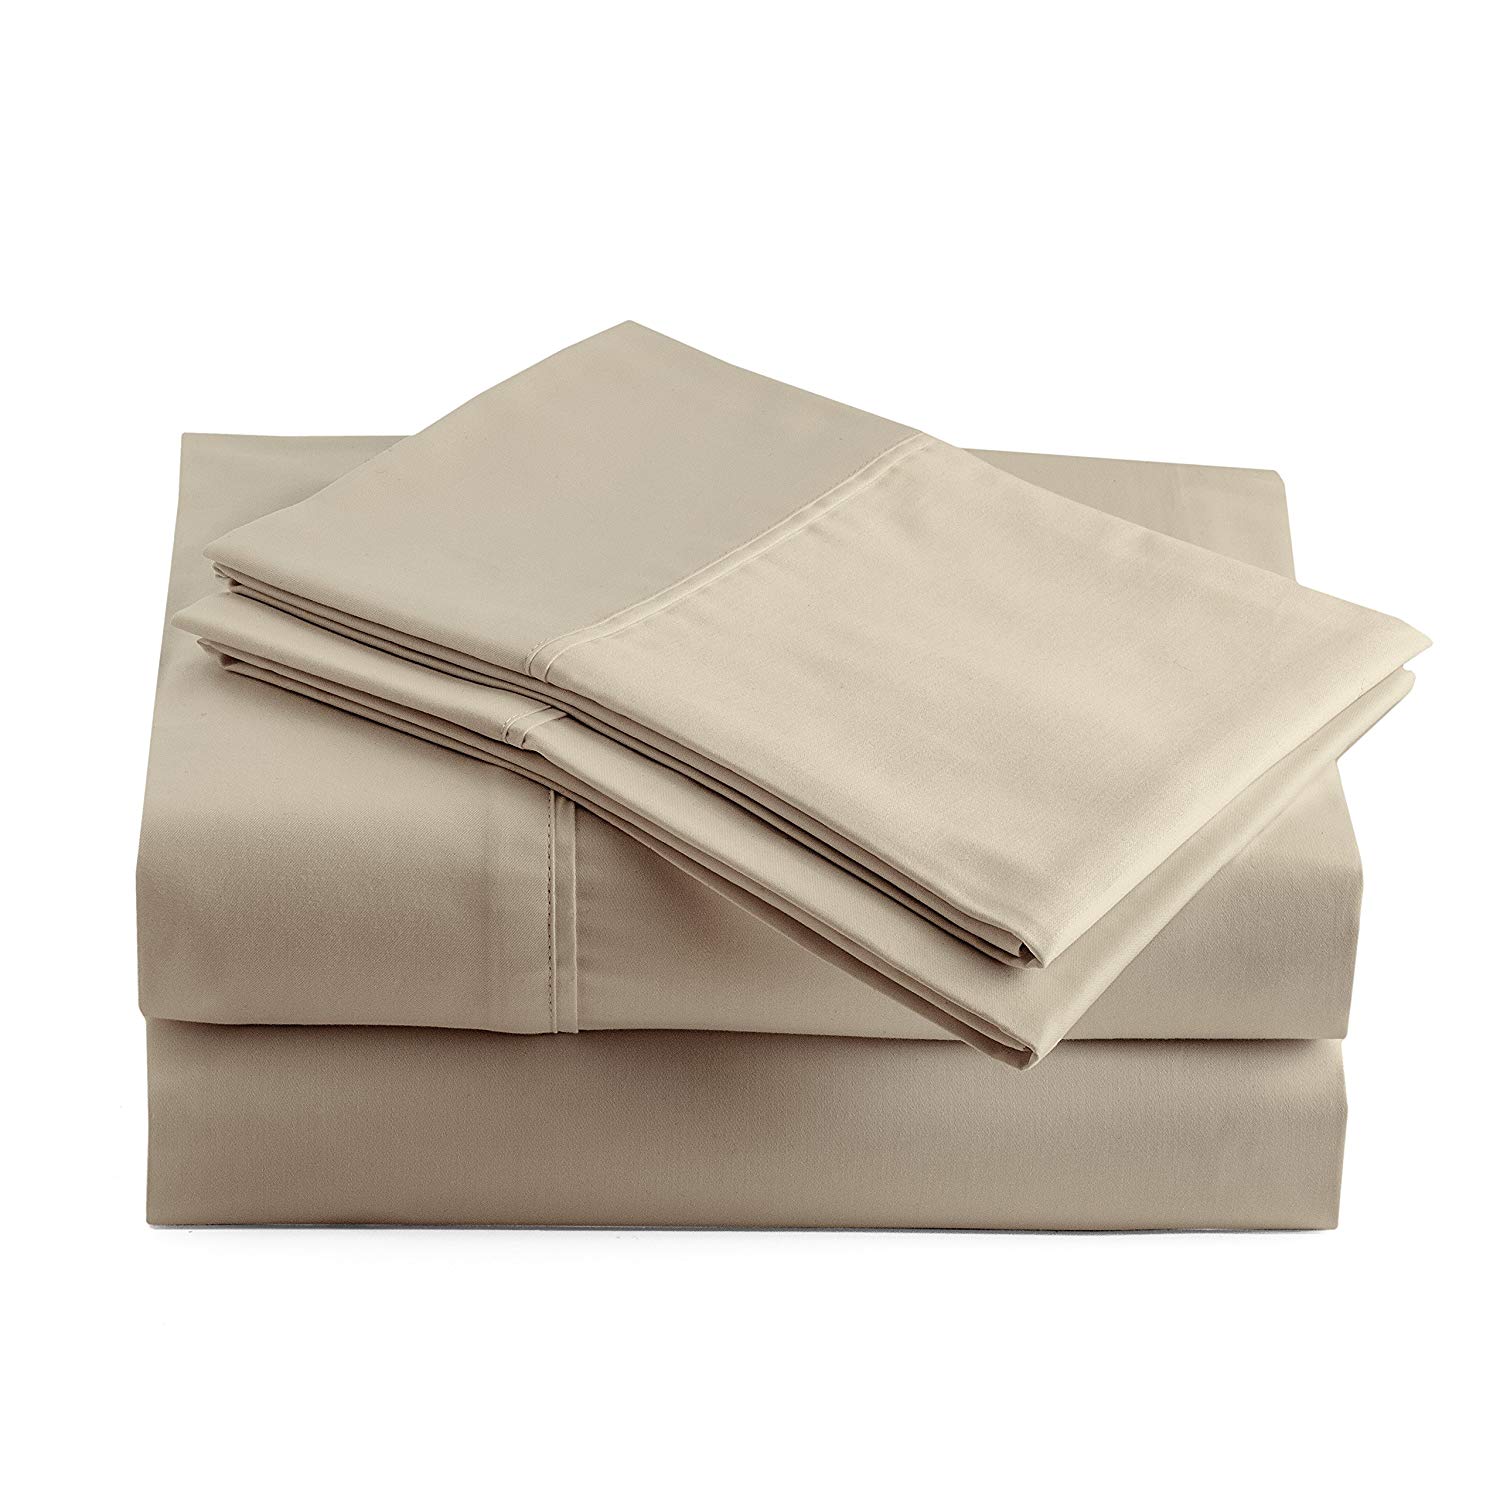 Peru Pima 100% Peruvian Pima Cotton Percale Bed Sheet Set 